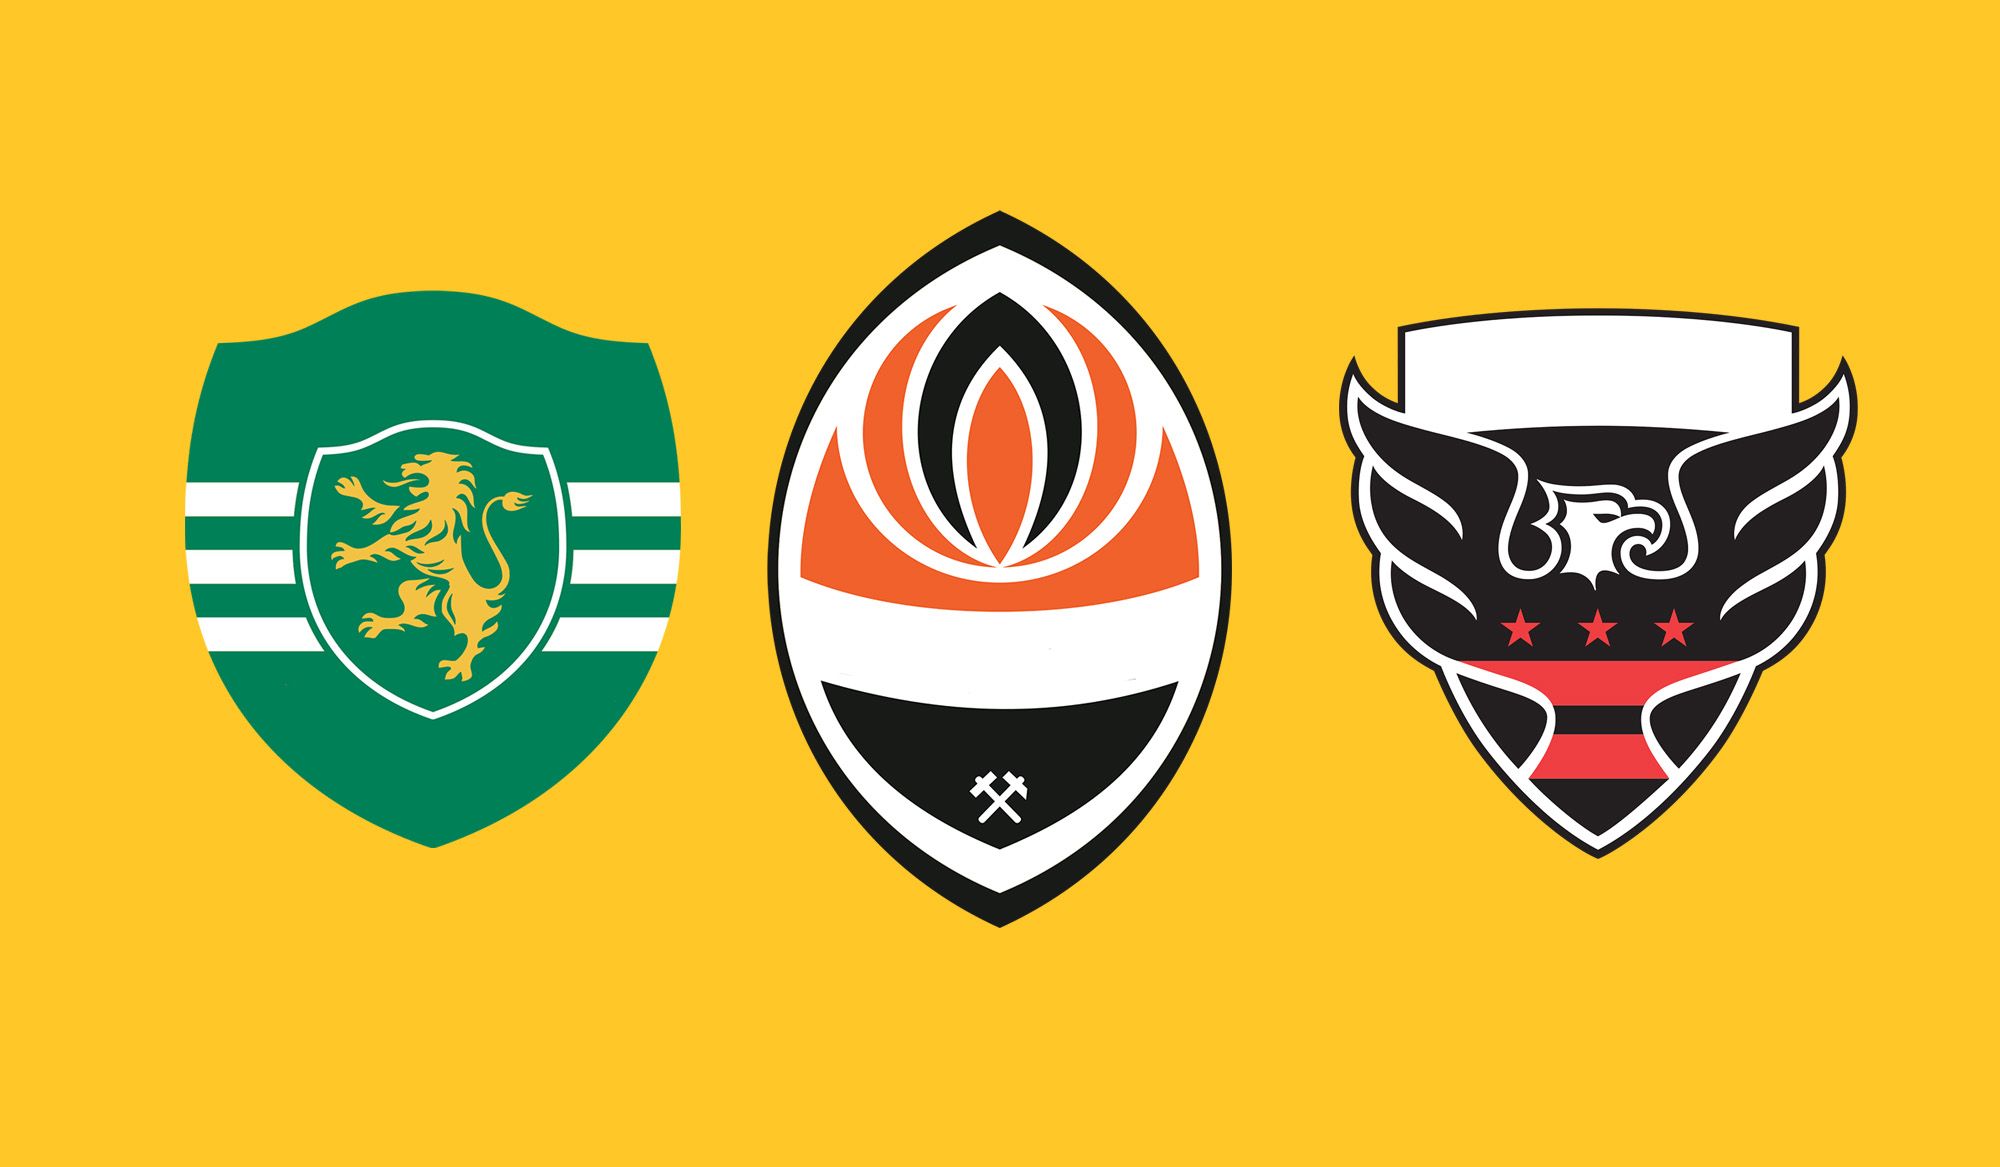 Can You Name The Football Badge/Logo? English Lower League Teams